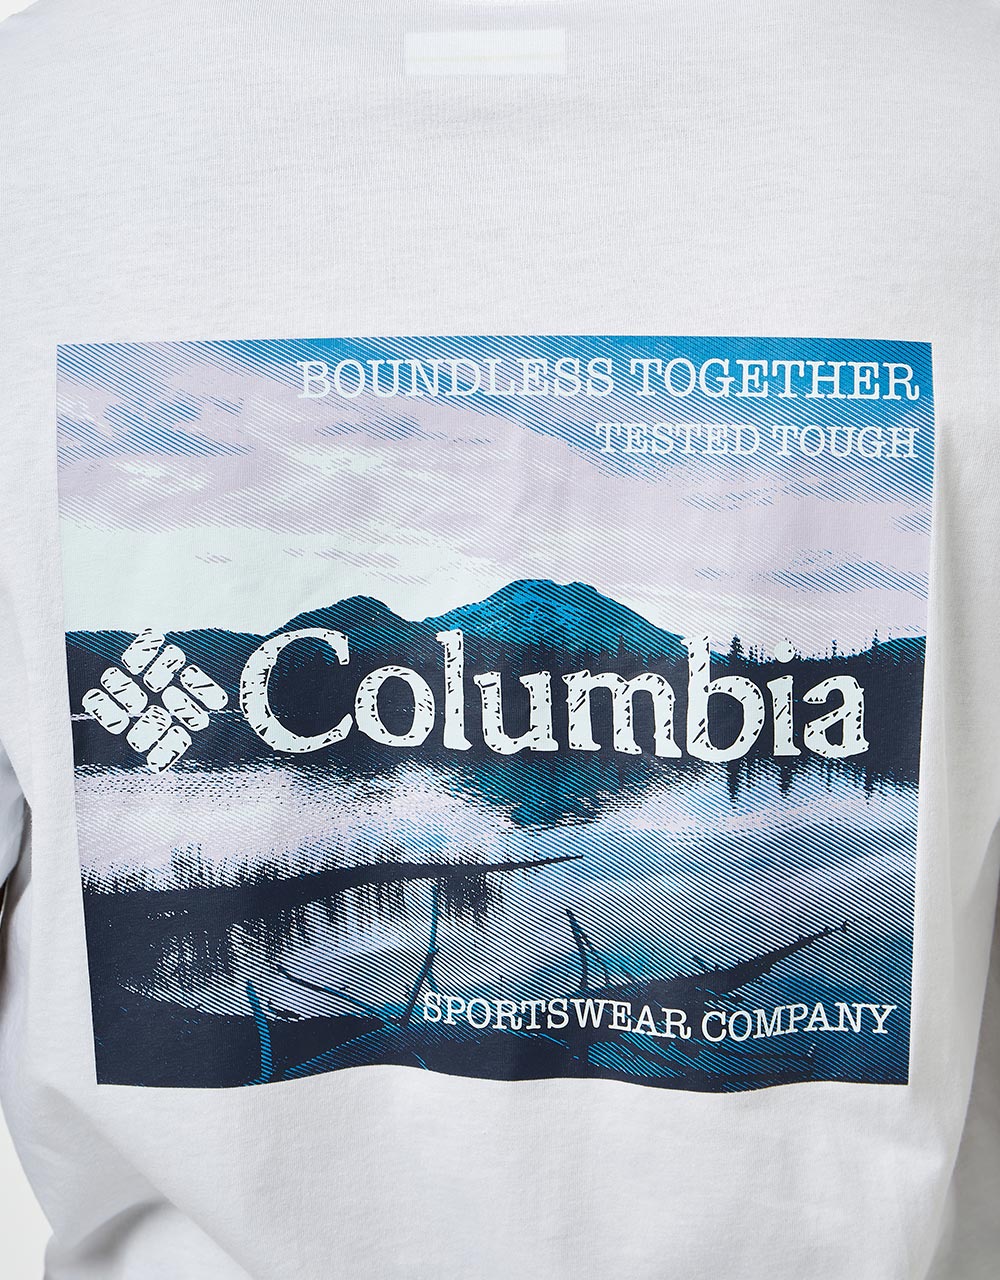 Columbia Rapid Ridge Back Graphic II T-Shirt - White Natures Palette